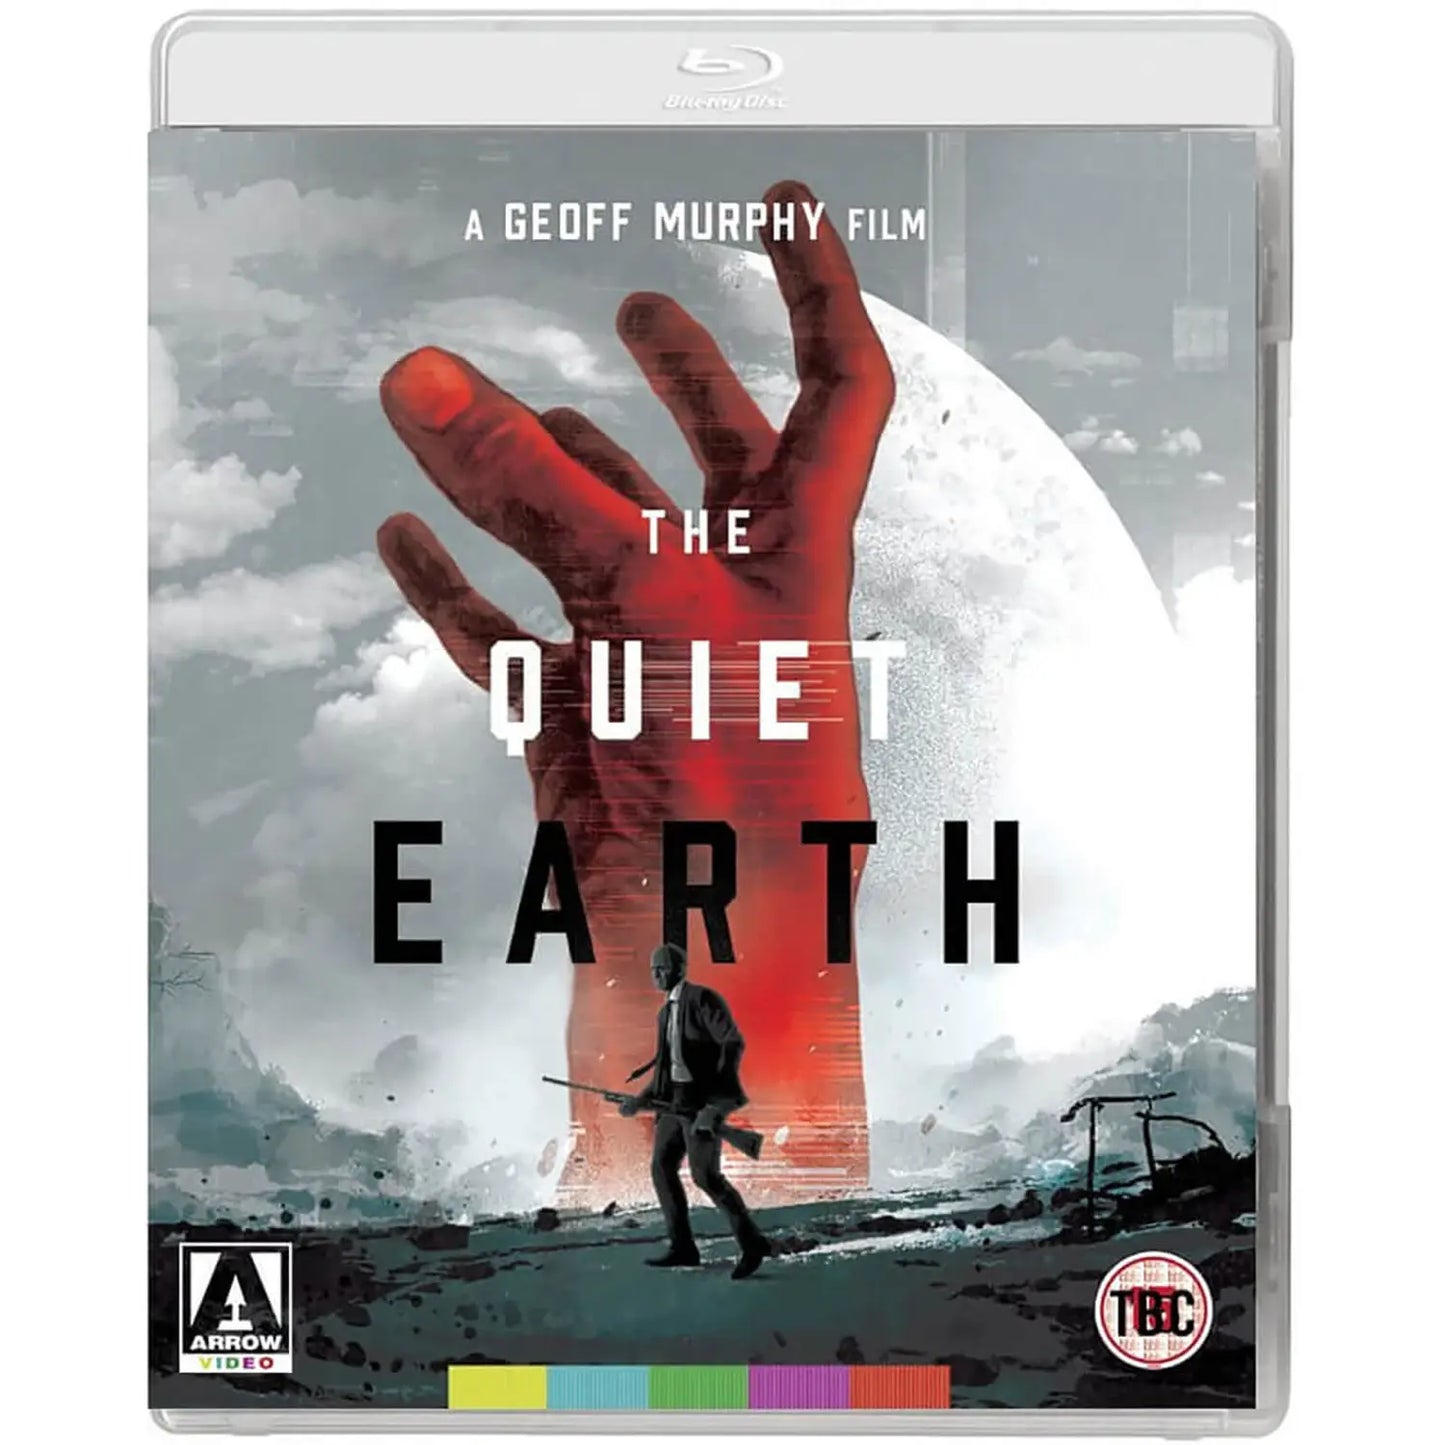 The Quiet Earth Blu-ray (Arrow UK/Region B)